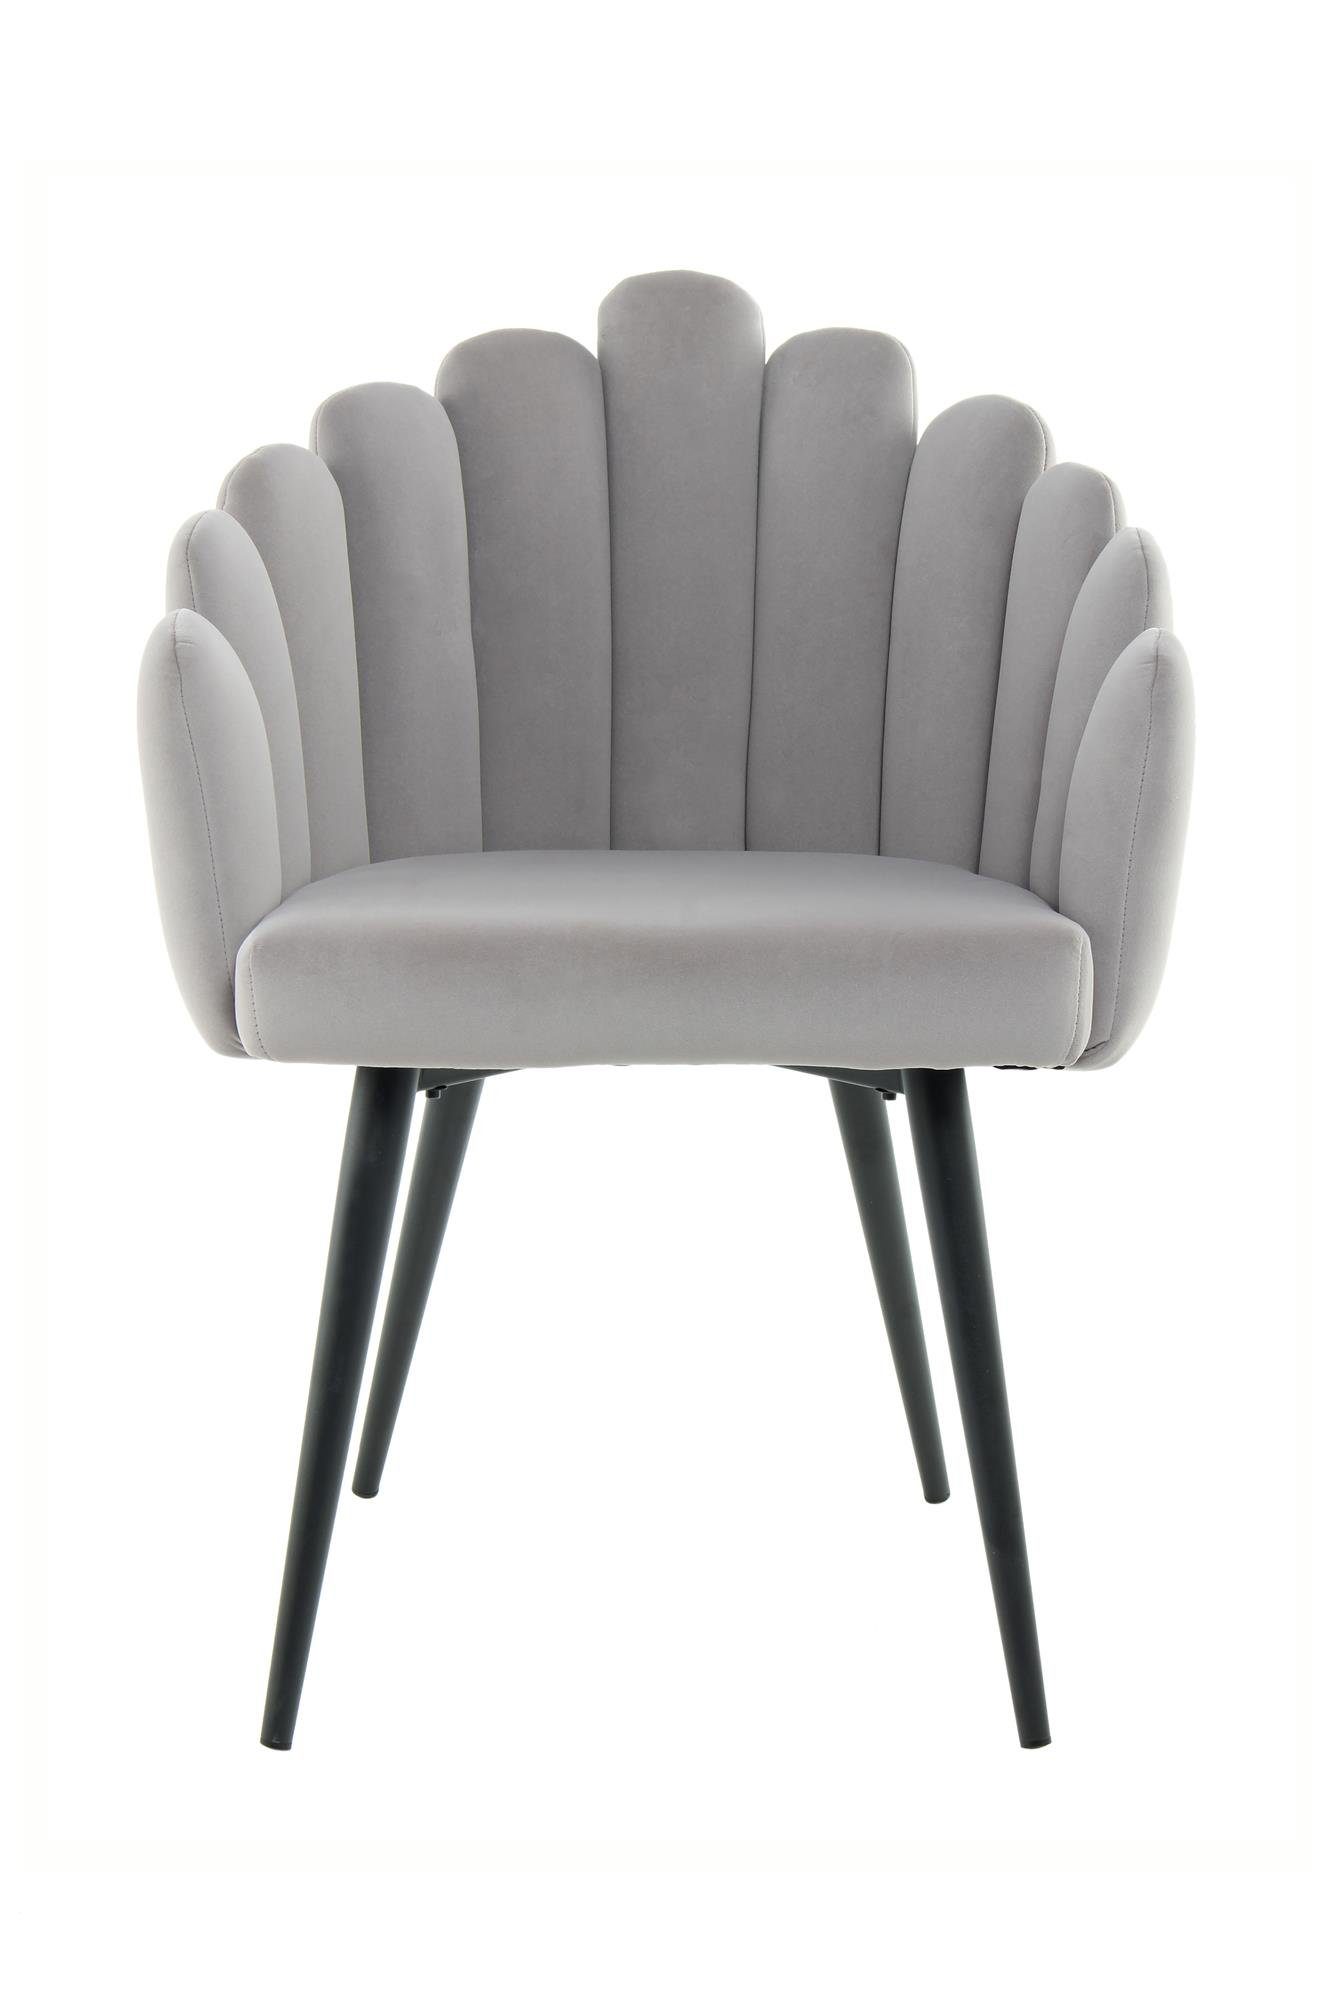 Qiyano Stuhl Sessel Samt-Stuhl mit Armlehne Muschel-Form Wohnzimmer Grau | Grau